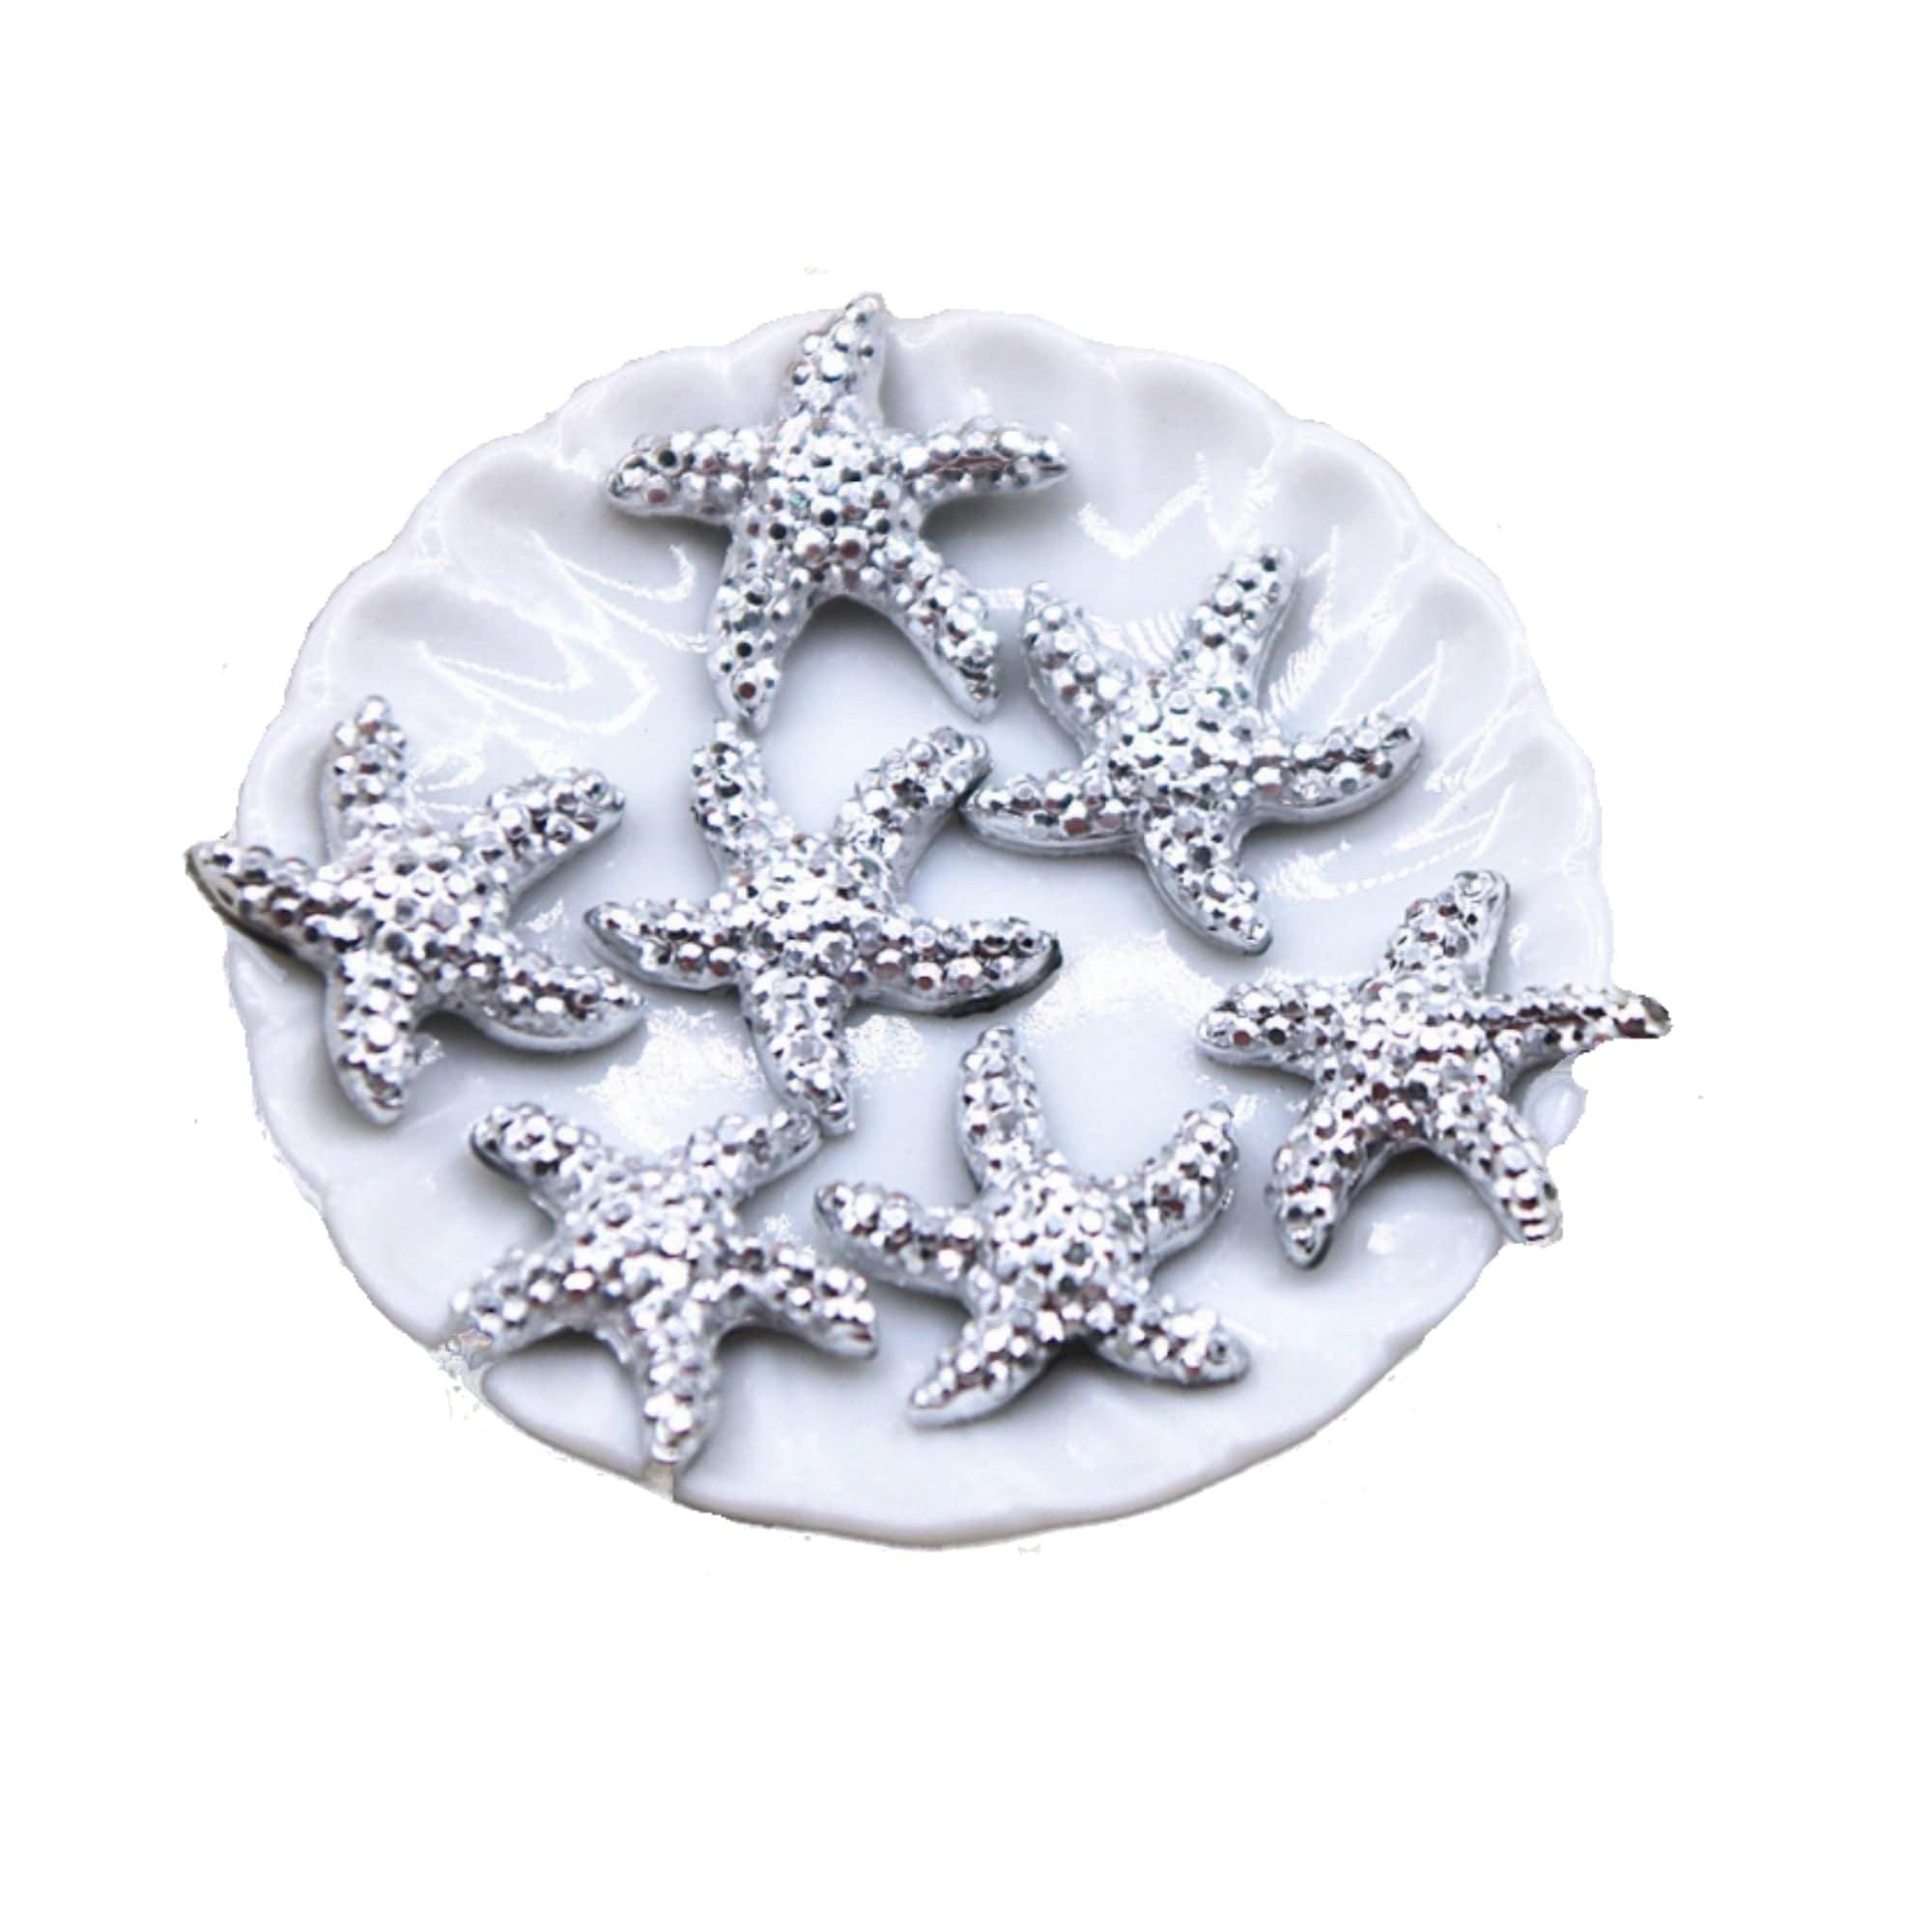 Silver Sea Stars Resin Flatback Scrapbook Embellishments by SSC Designs - 10 pieces